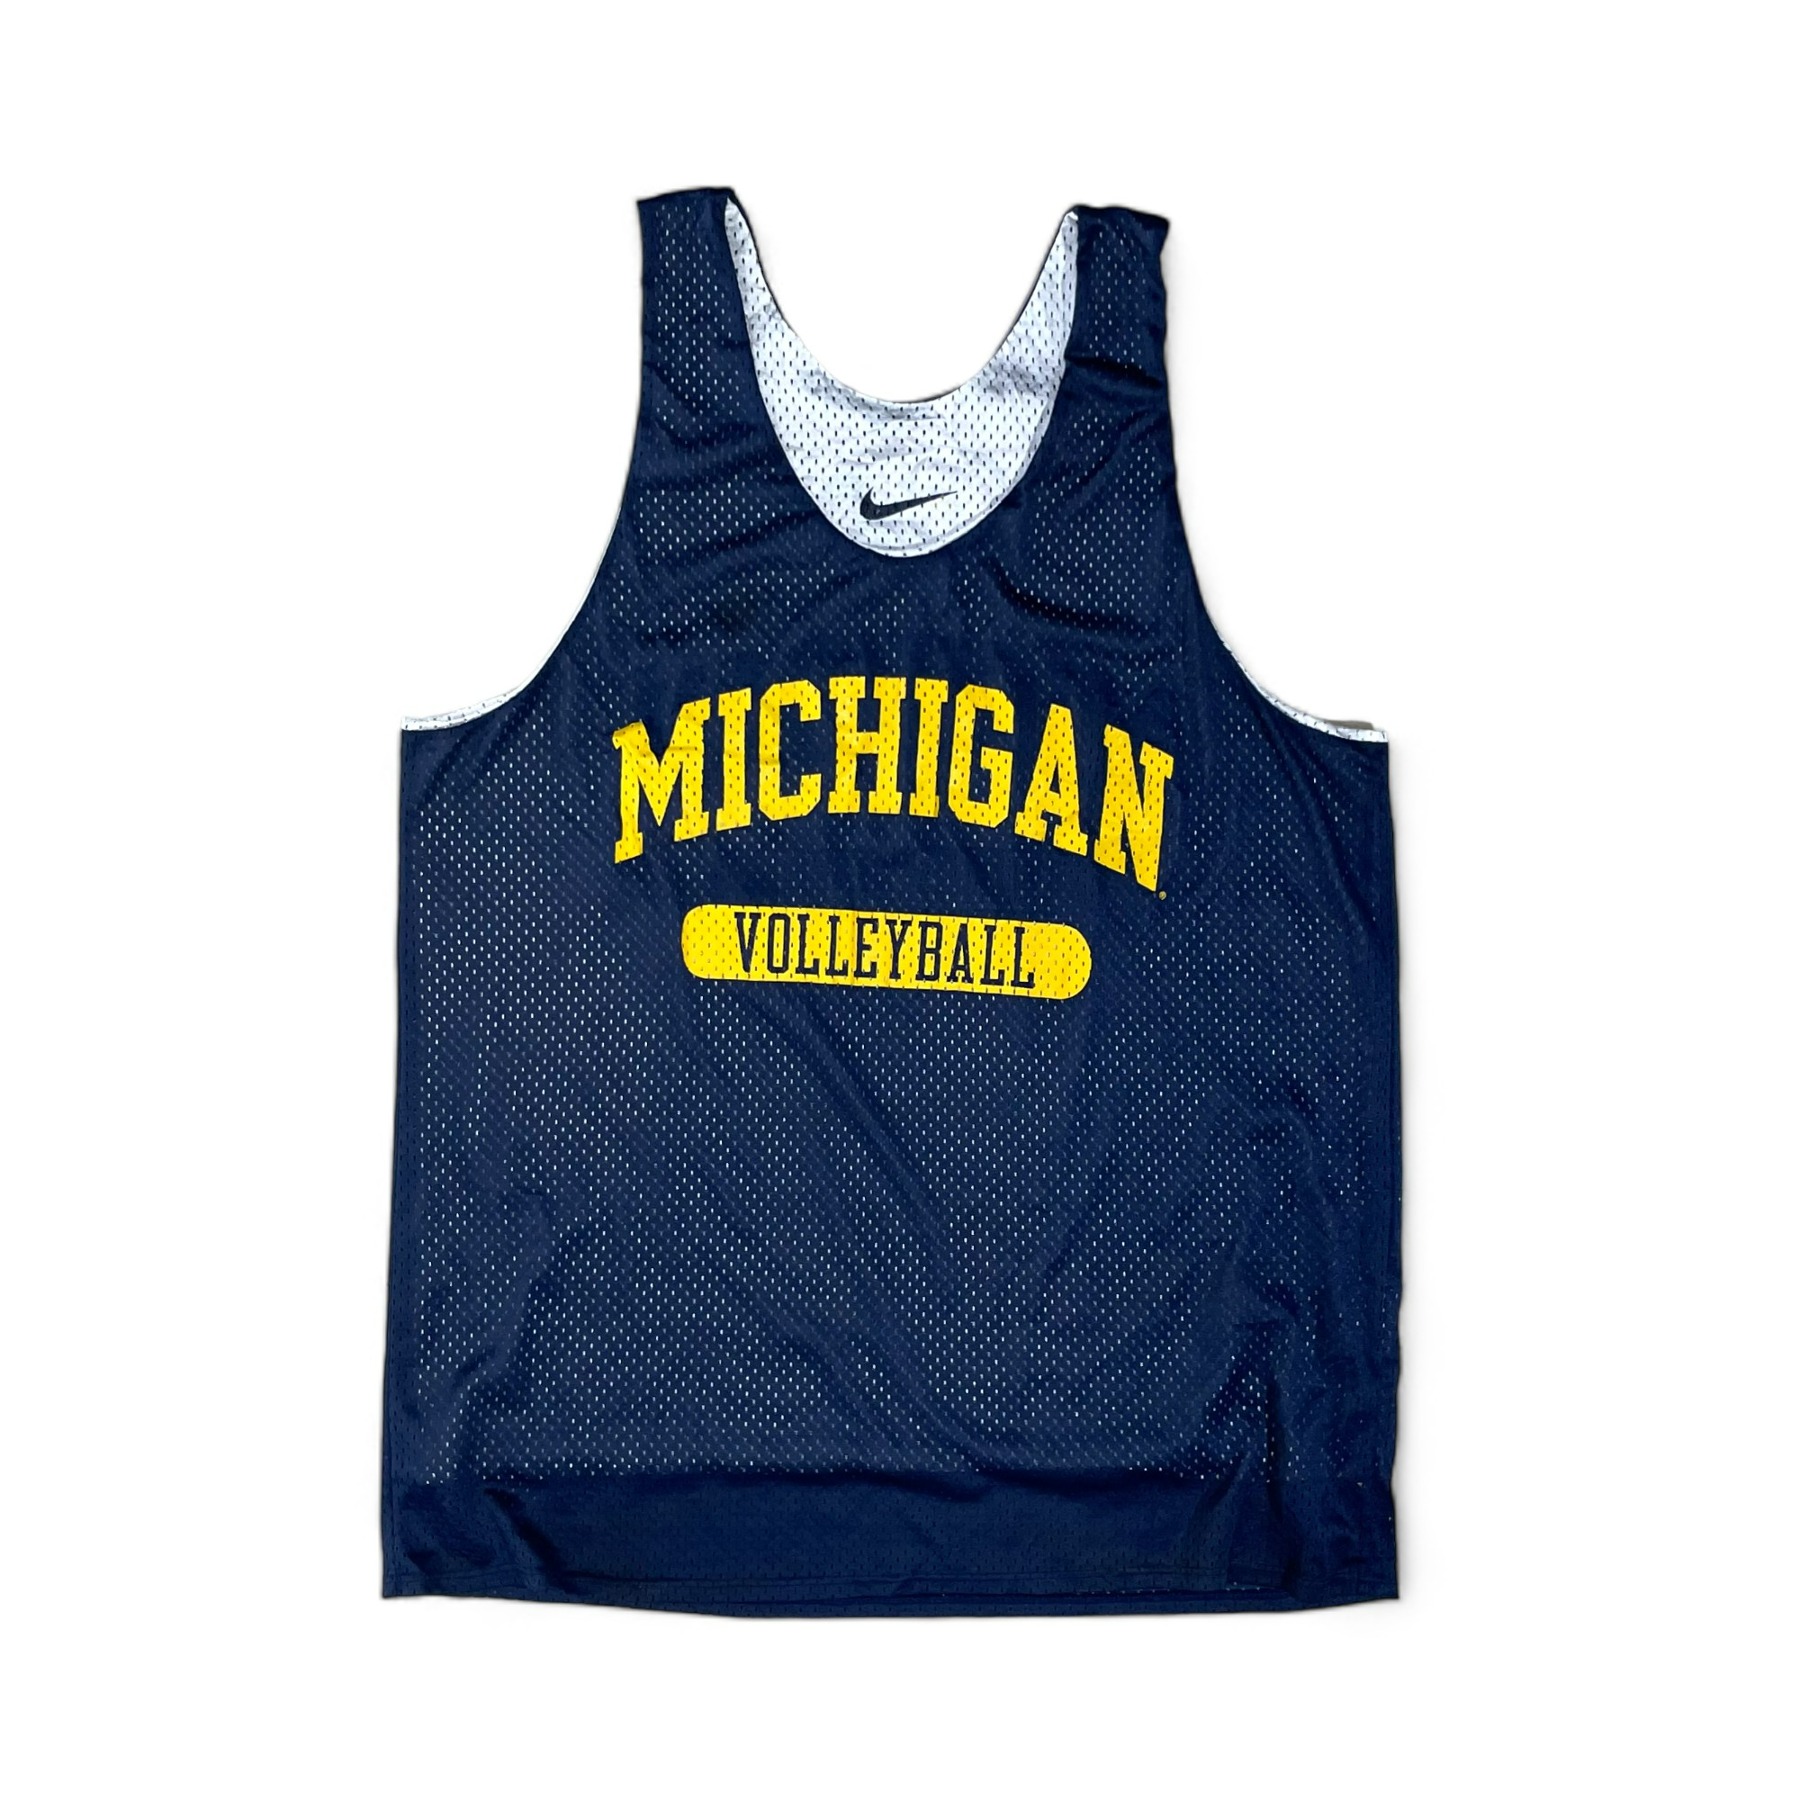 1998 NIKE Michigan Wolverines Reversible Jersey (Made in USA) - M